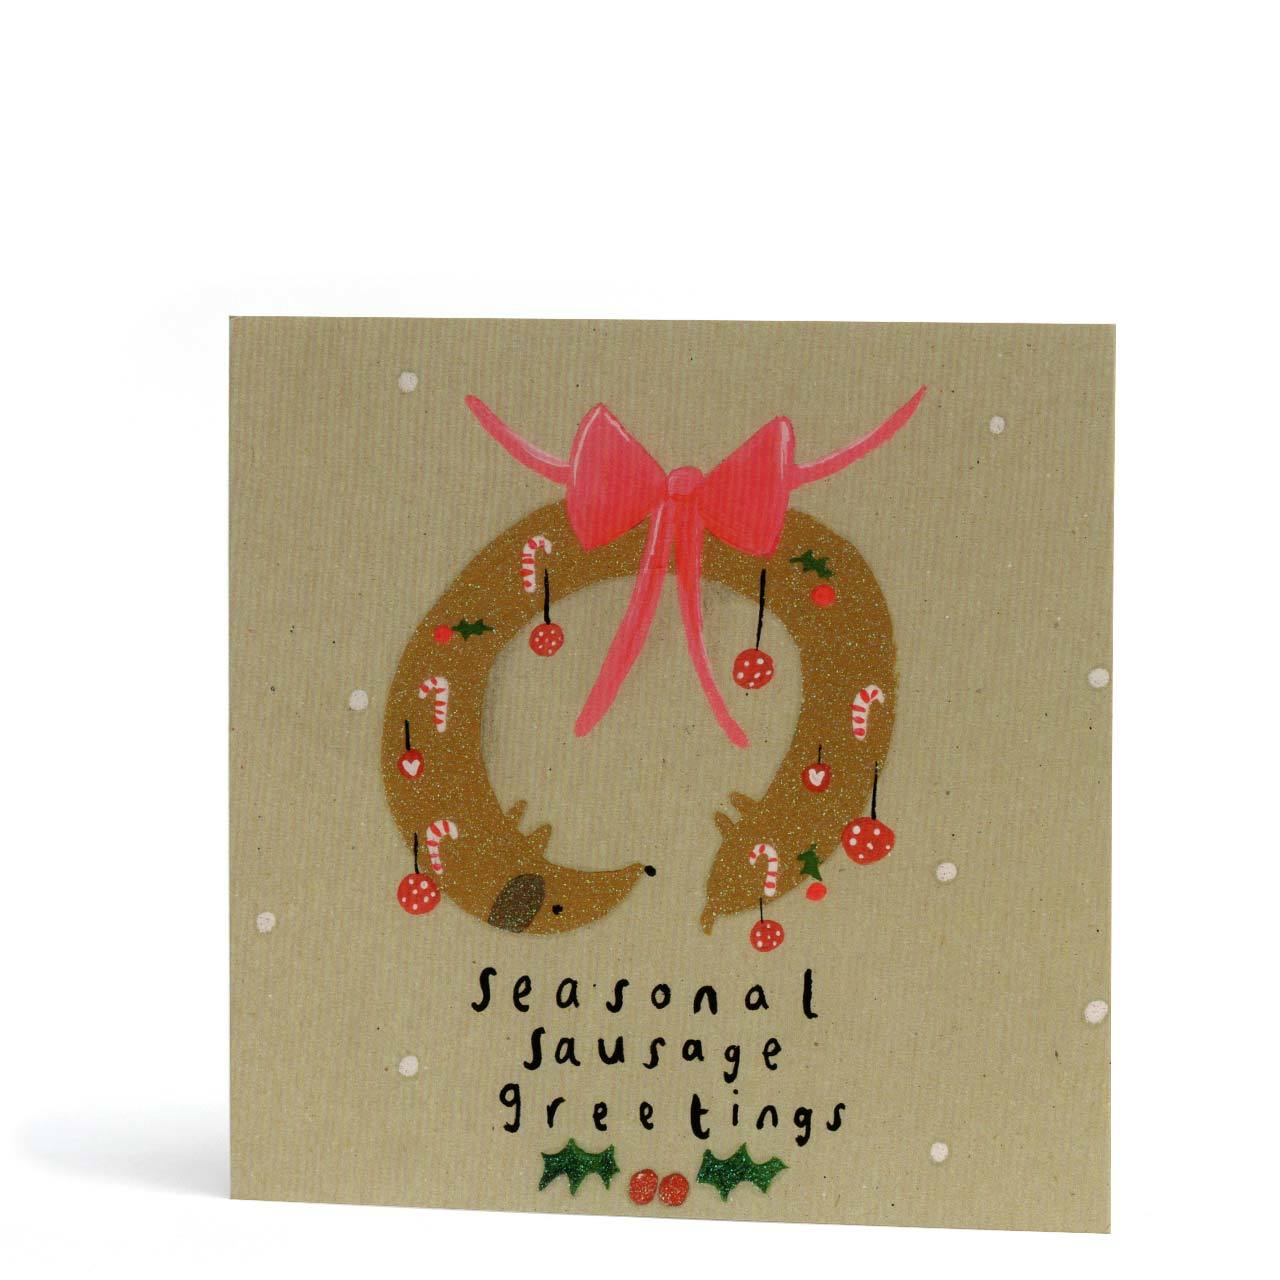 Seasonal Sausage Greetings Christmas Card